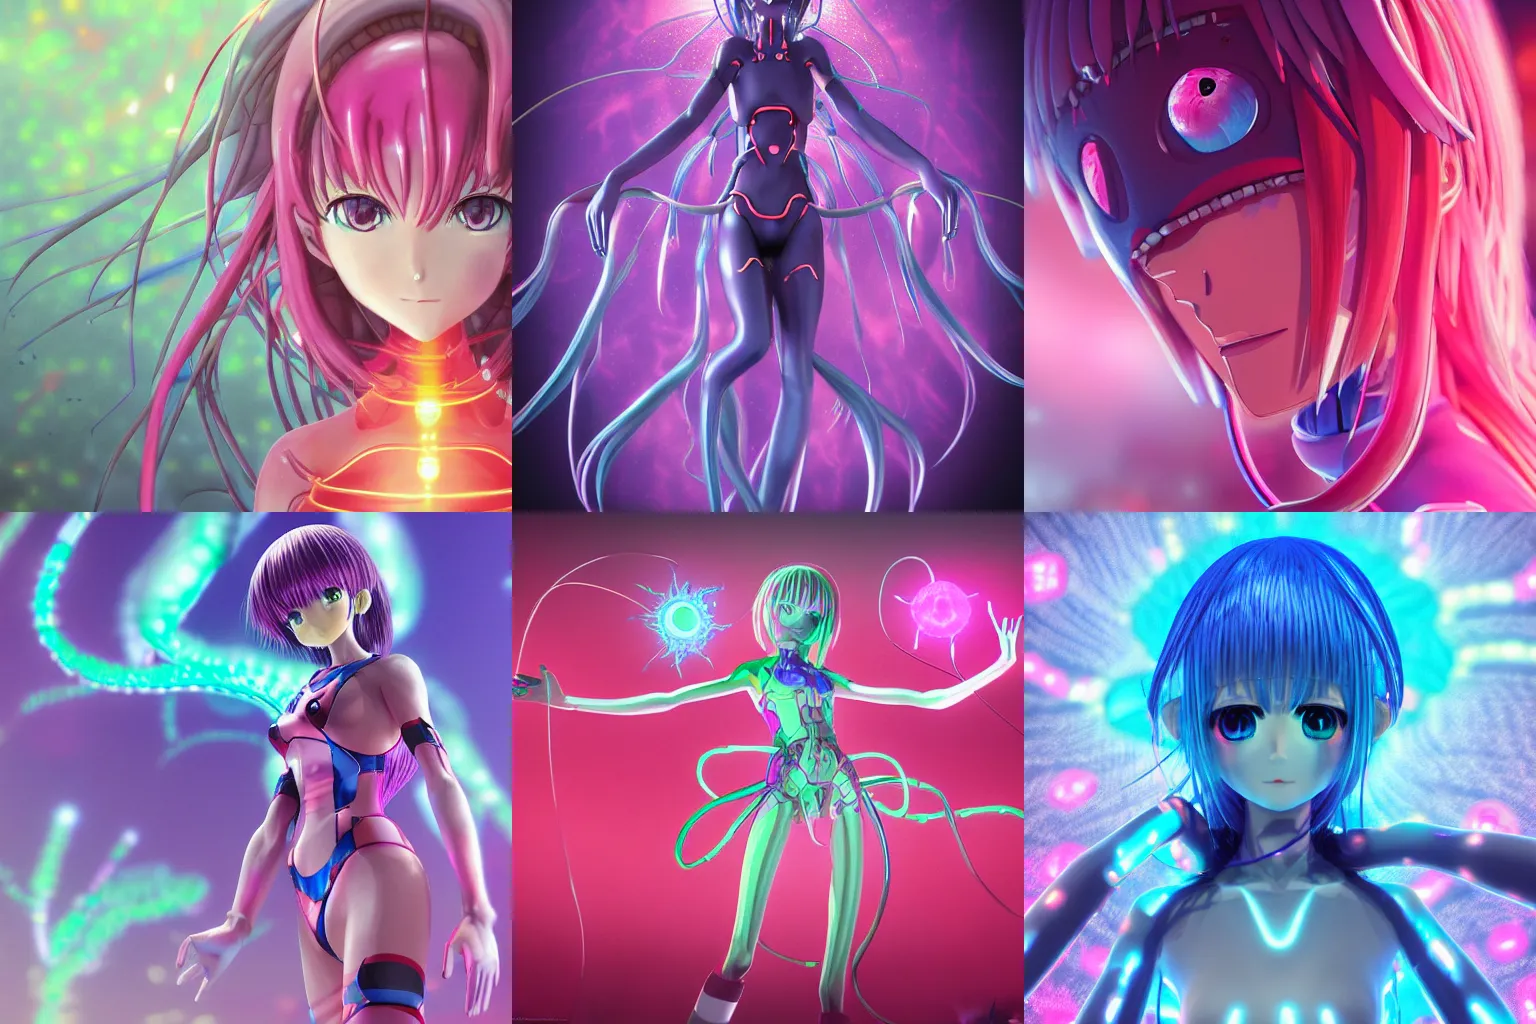 Prompt: intricate anime girl neon genesis evangelion, jellyfish bio-mechanical bio-luminescence, octane render, trending on artstation, hyper realism, 8k, fractals, pattern